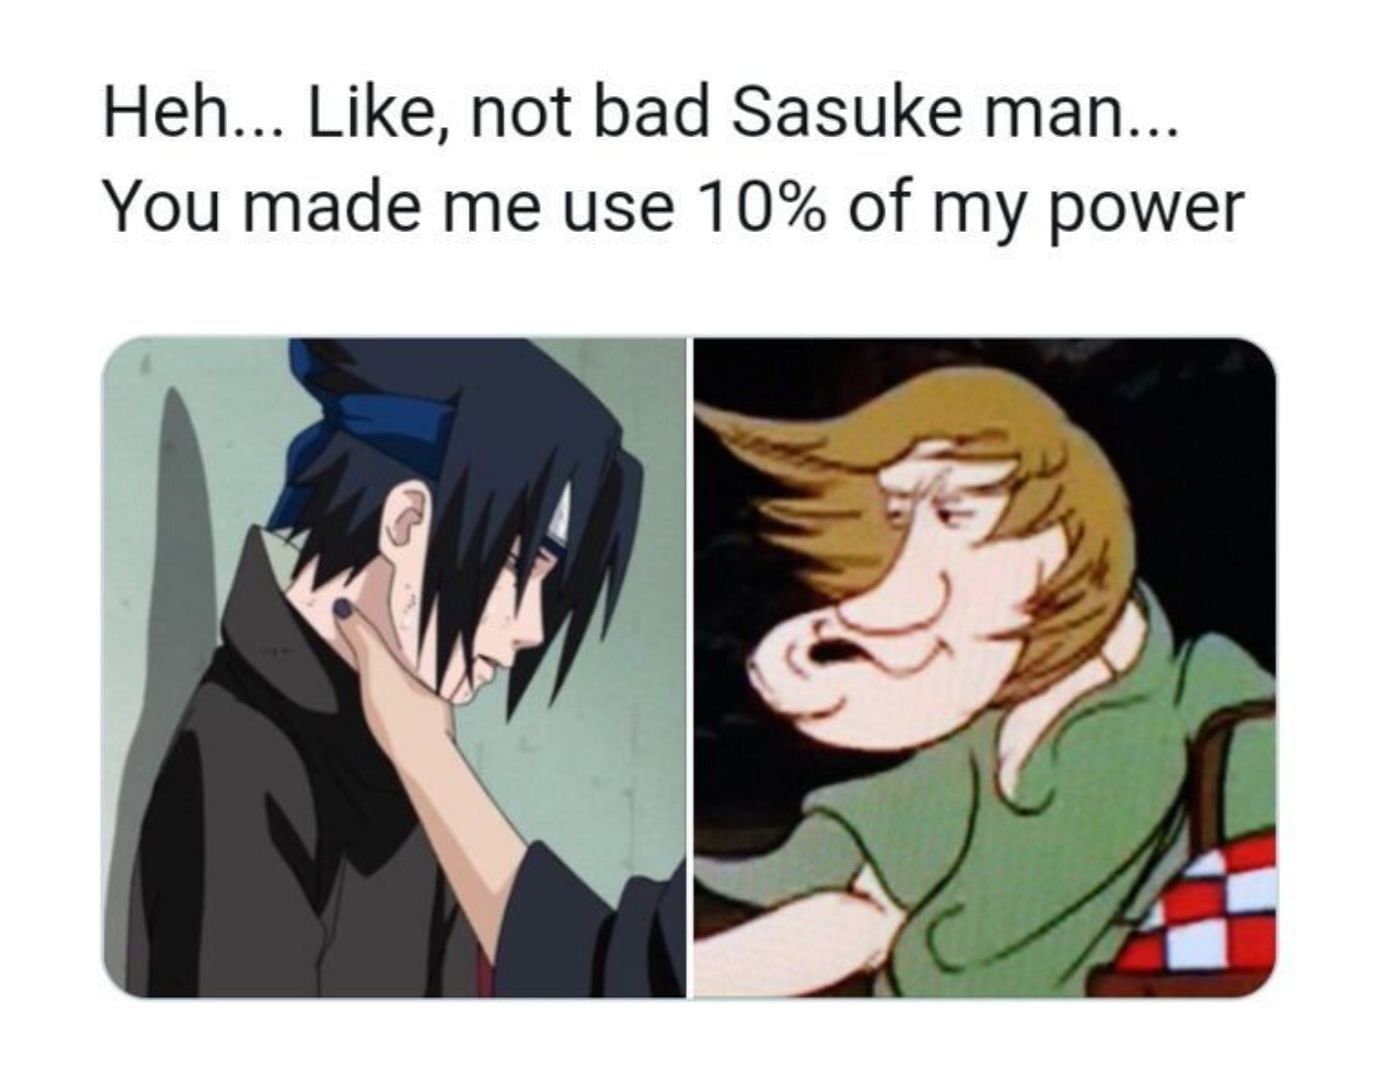 Choking Sasuke meme with Shaggy (Image via Twitter)